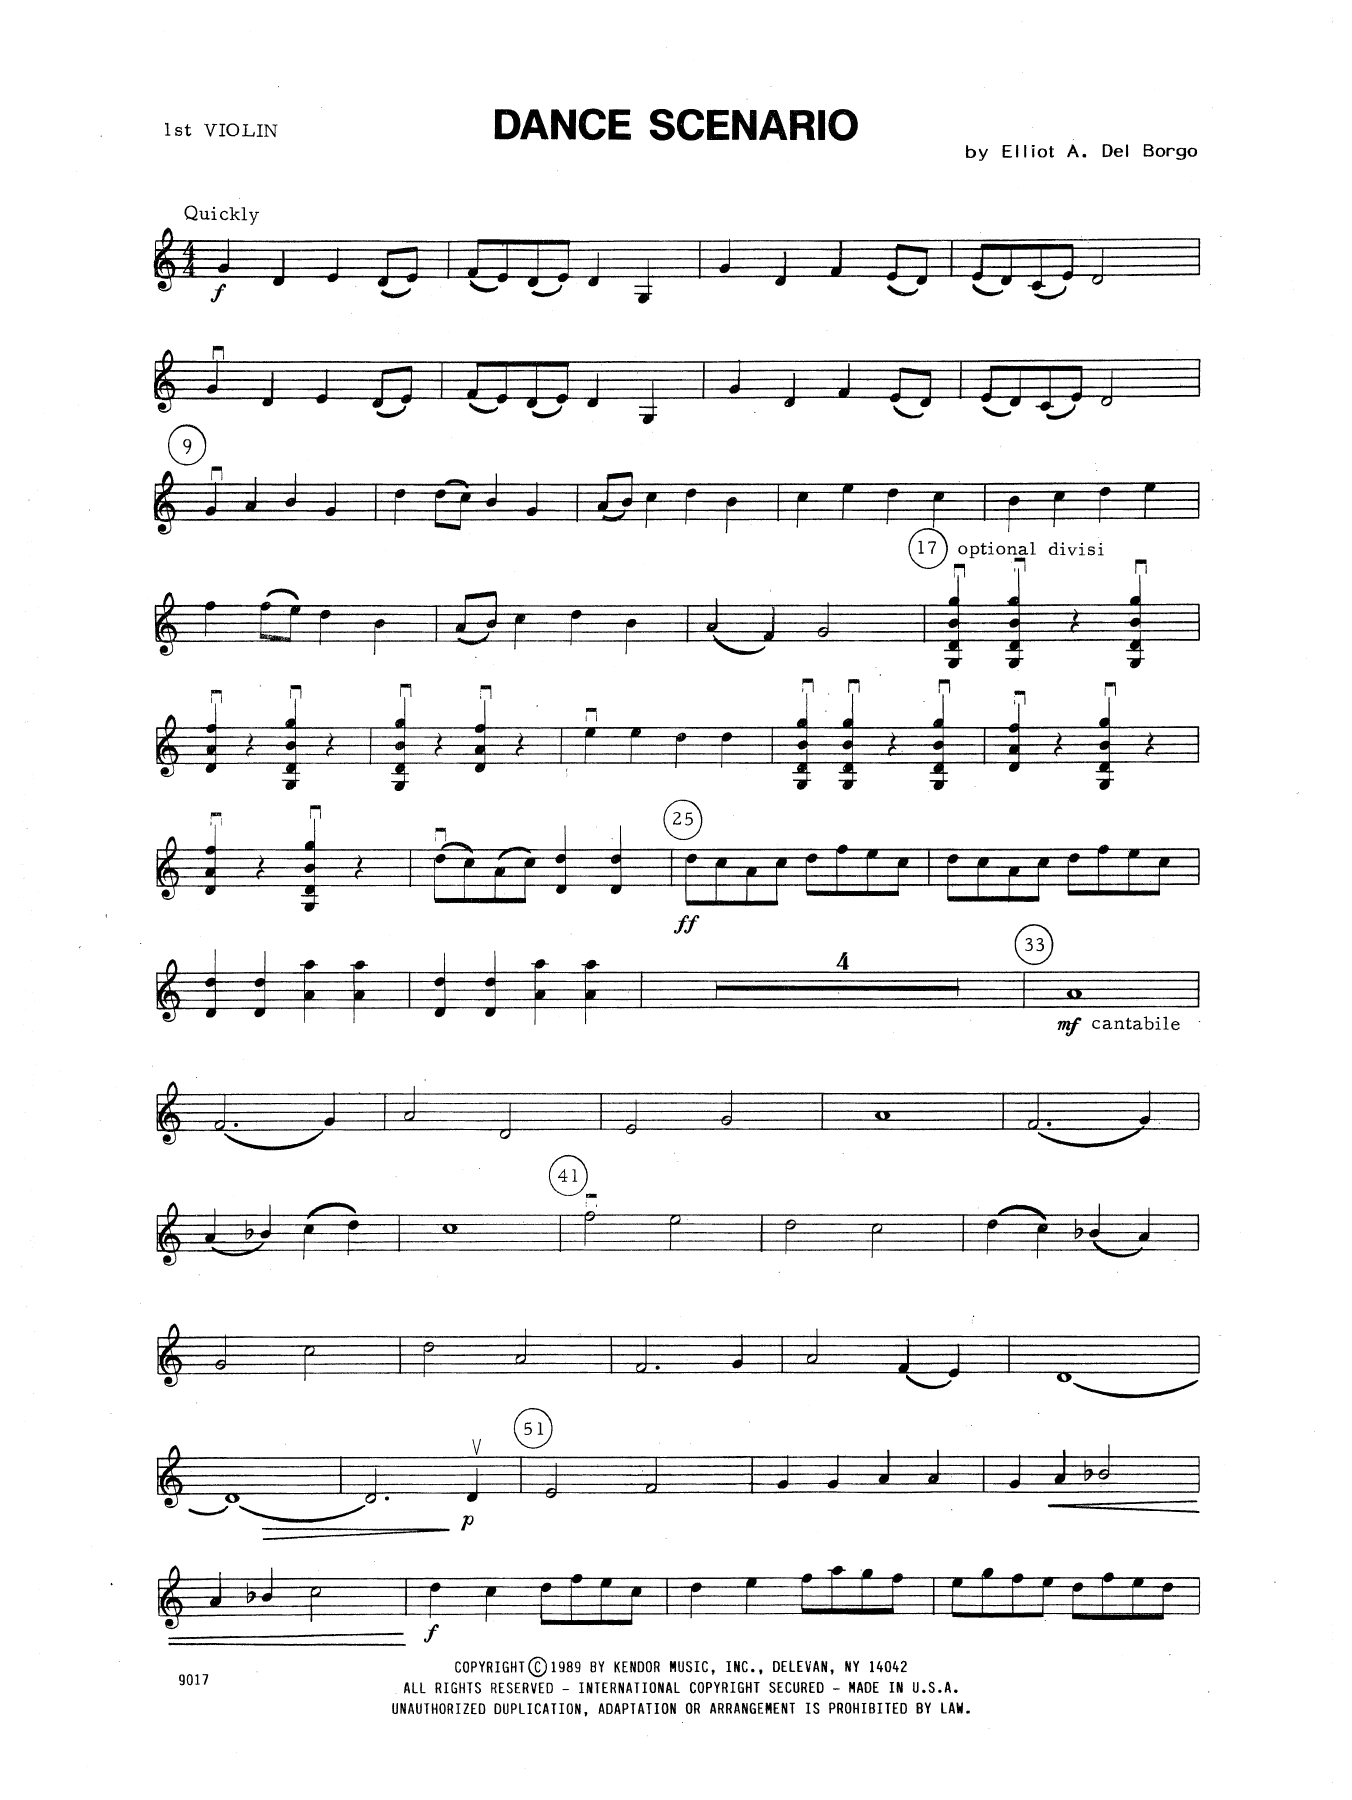 Dance Scenario - 1st Violin sheet music